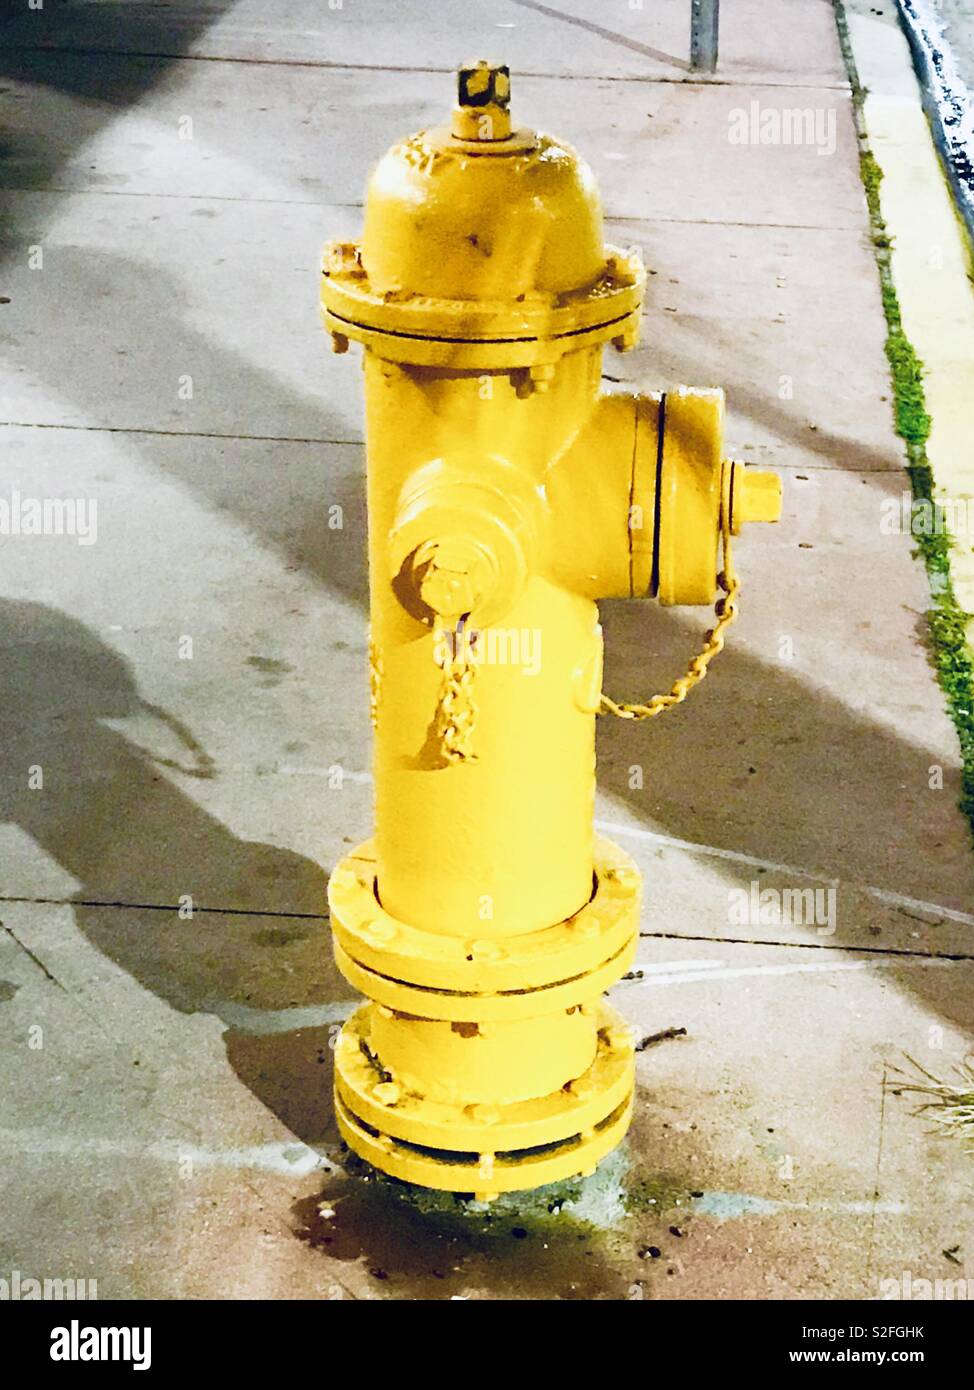 Bright yellow fire hydrant Stock Photo